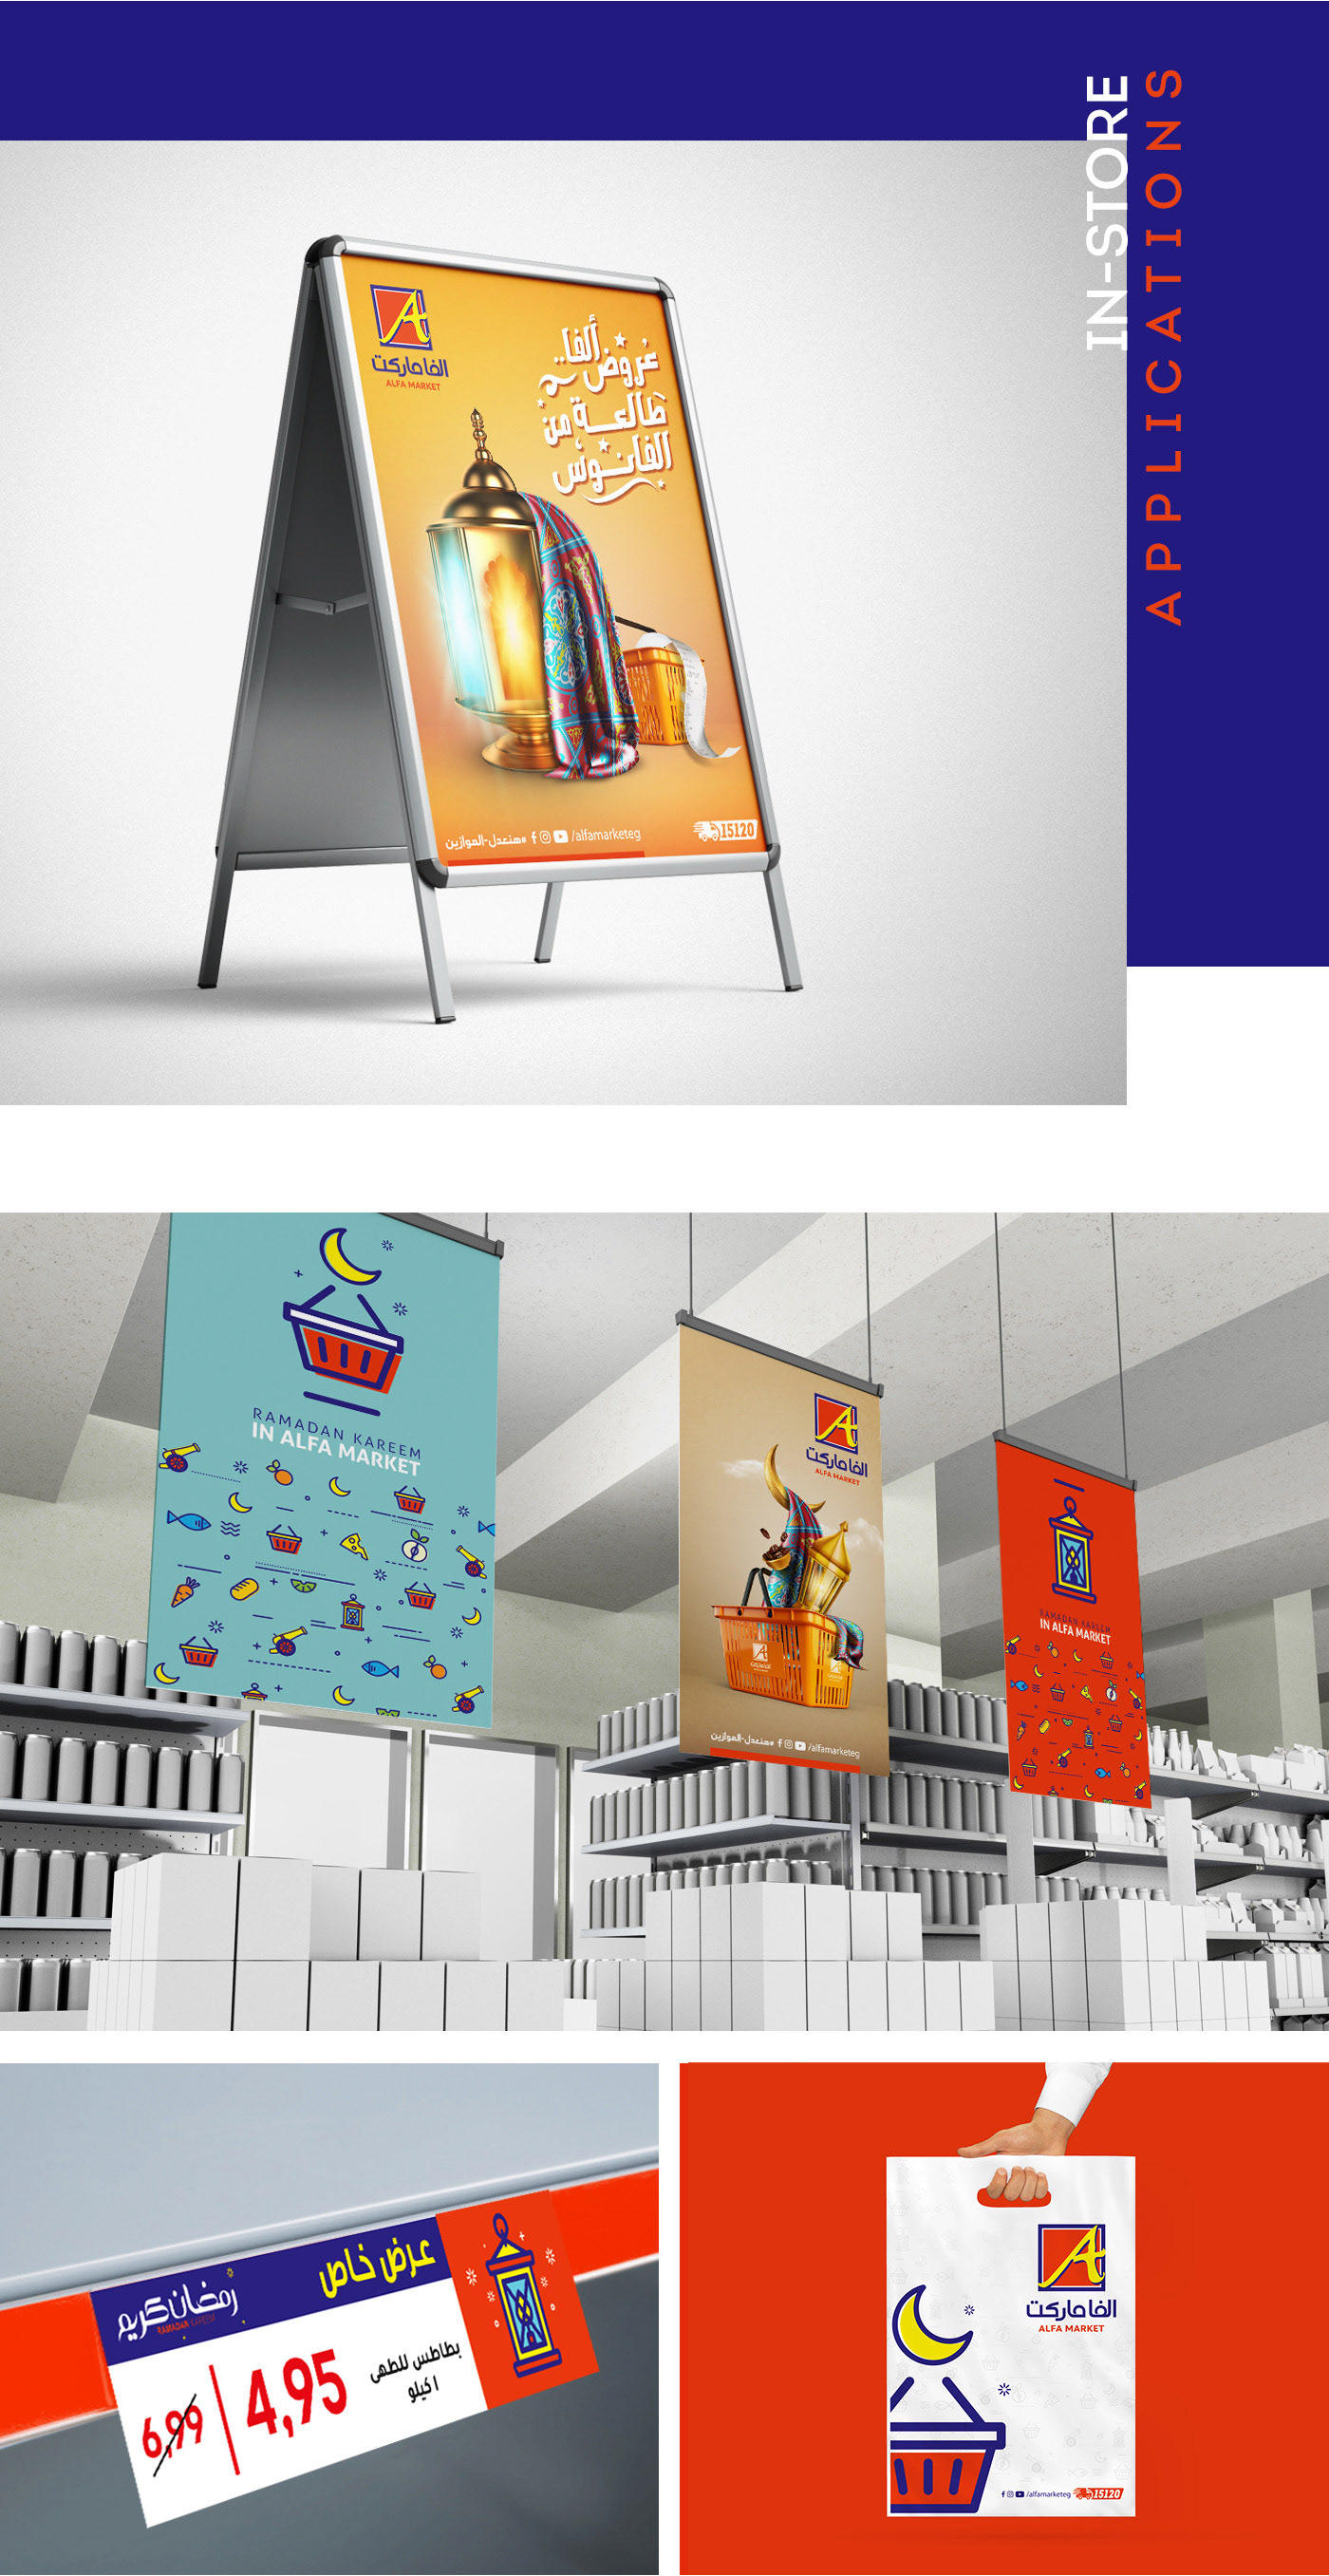 Alfa Market branding  compositing concept creative graphic design  Ramadan 2020 ramadan kareem Retail Market visual